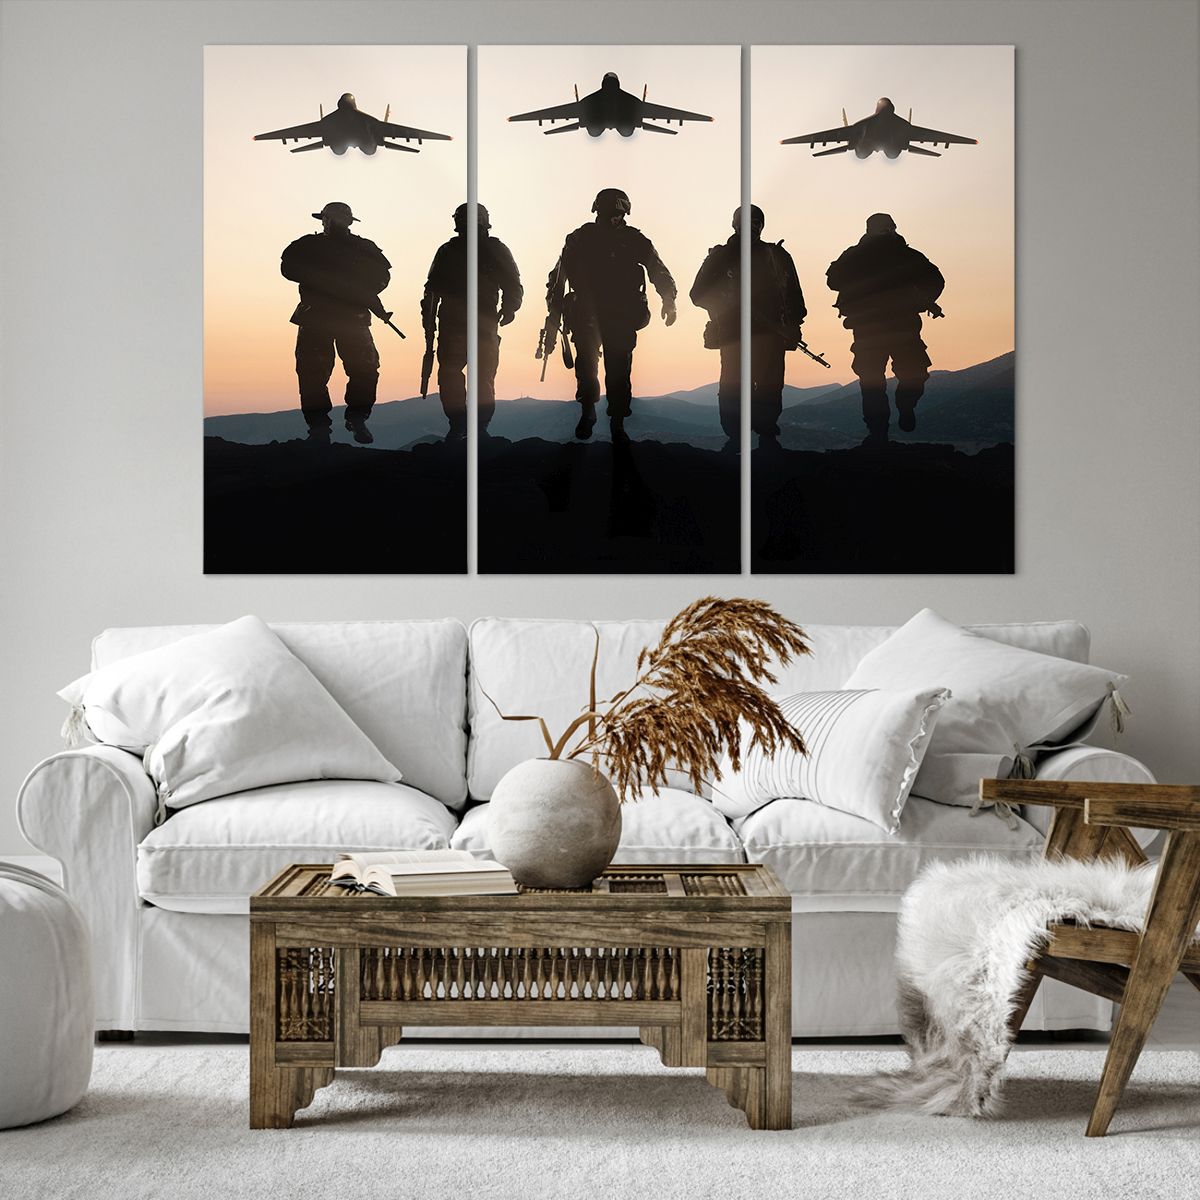 Cuadro sobre lienzo Militar, Cuadro sobre lienzo Ejército, Cuadro sobre lienzo Soldados, Cuadro sobre lienzo Avión Militar, Cuadro sobre lienzo Ejército